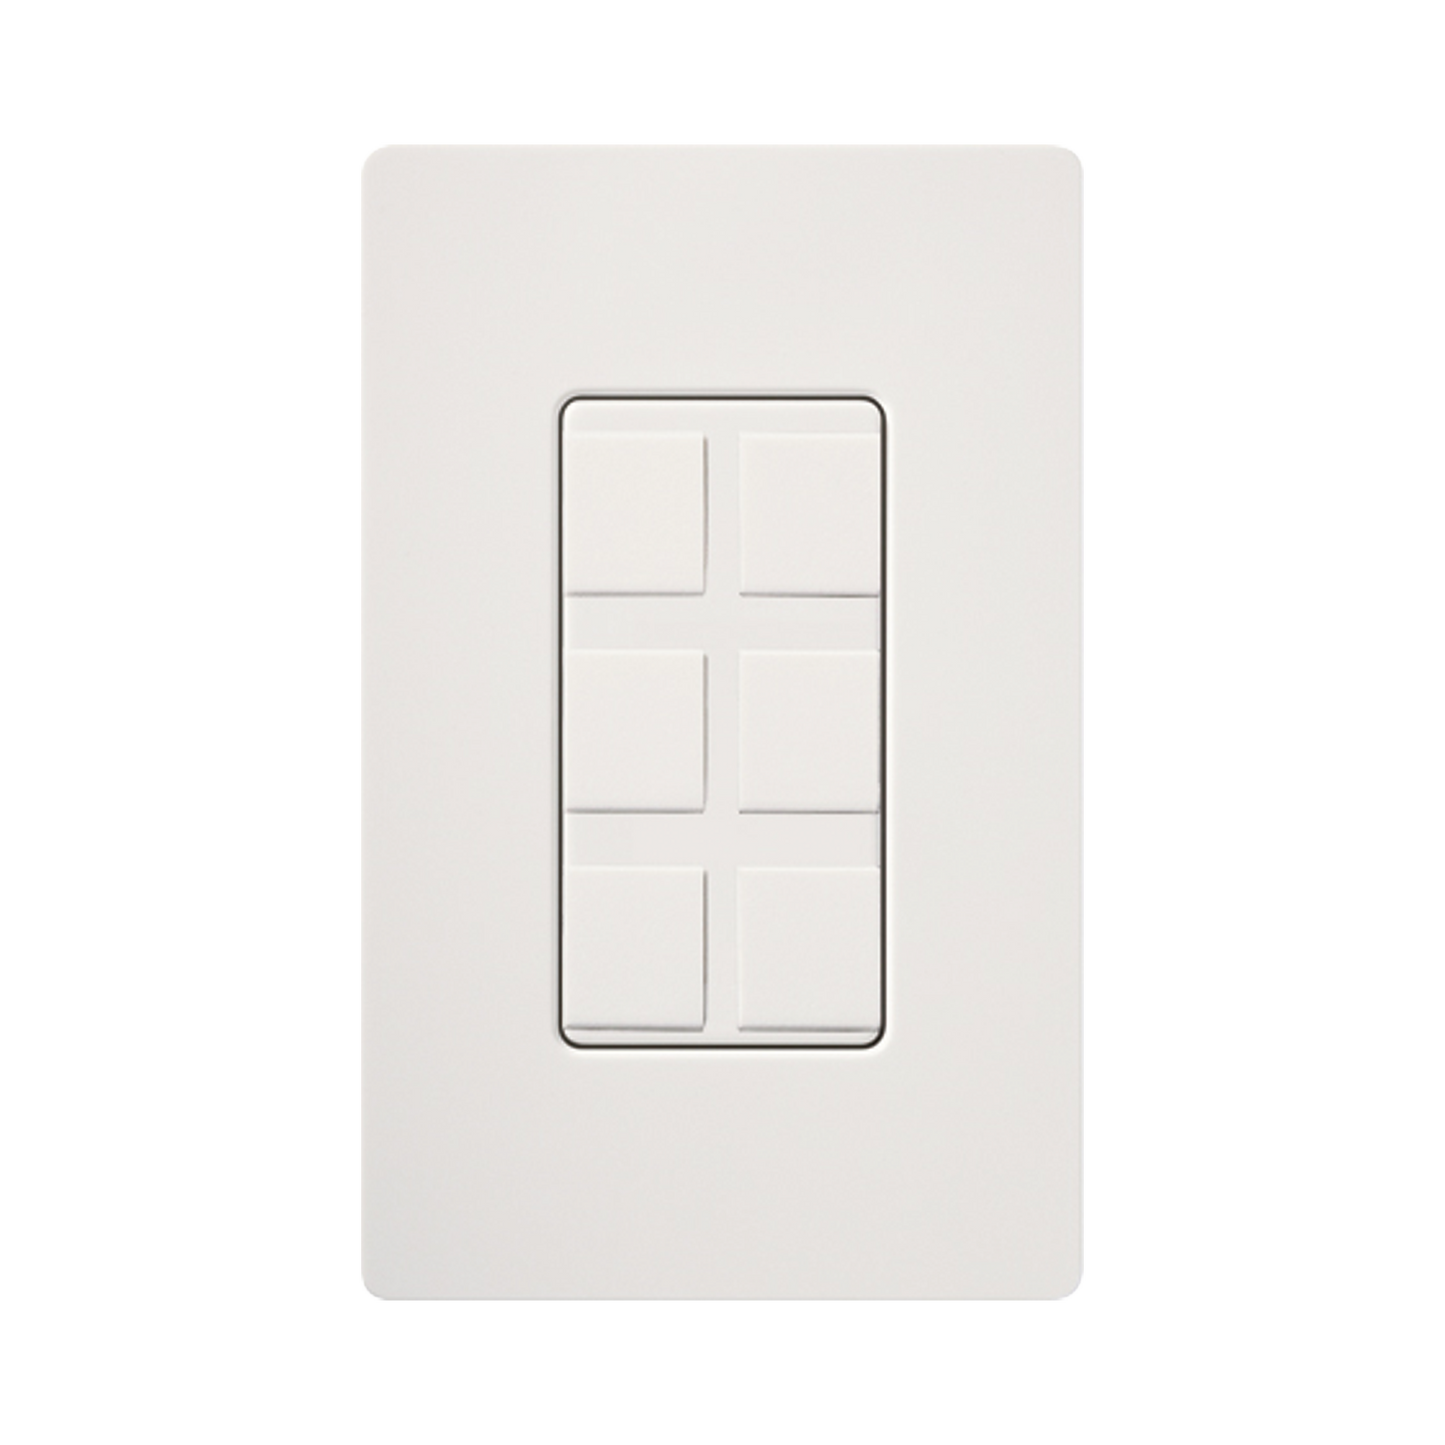 Caja de pared para contactos varios, 6 mini espacios.